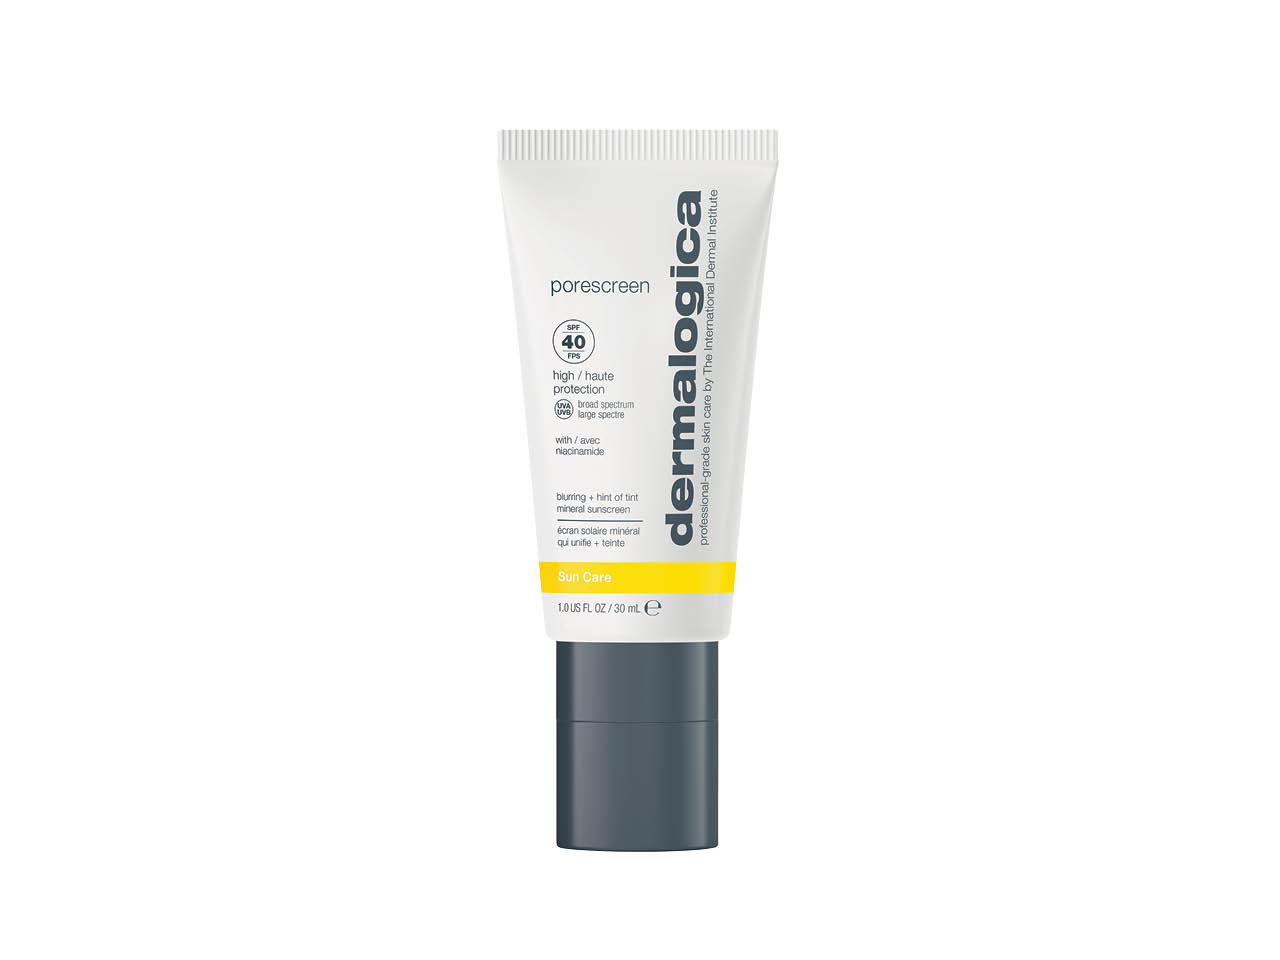 A white squeeze tube with a grey cap of Dermalogica Porescreen SPF 40 sunscreen.